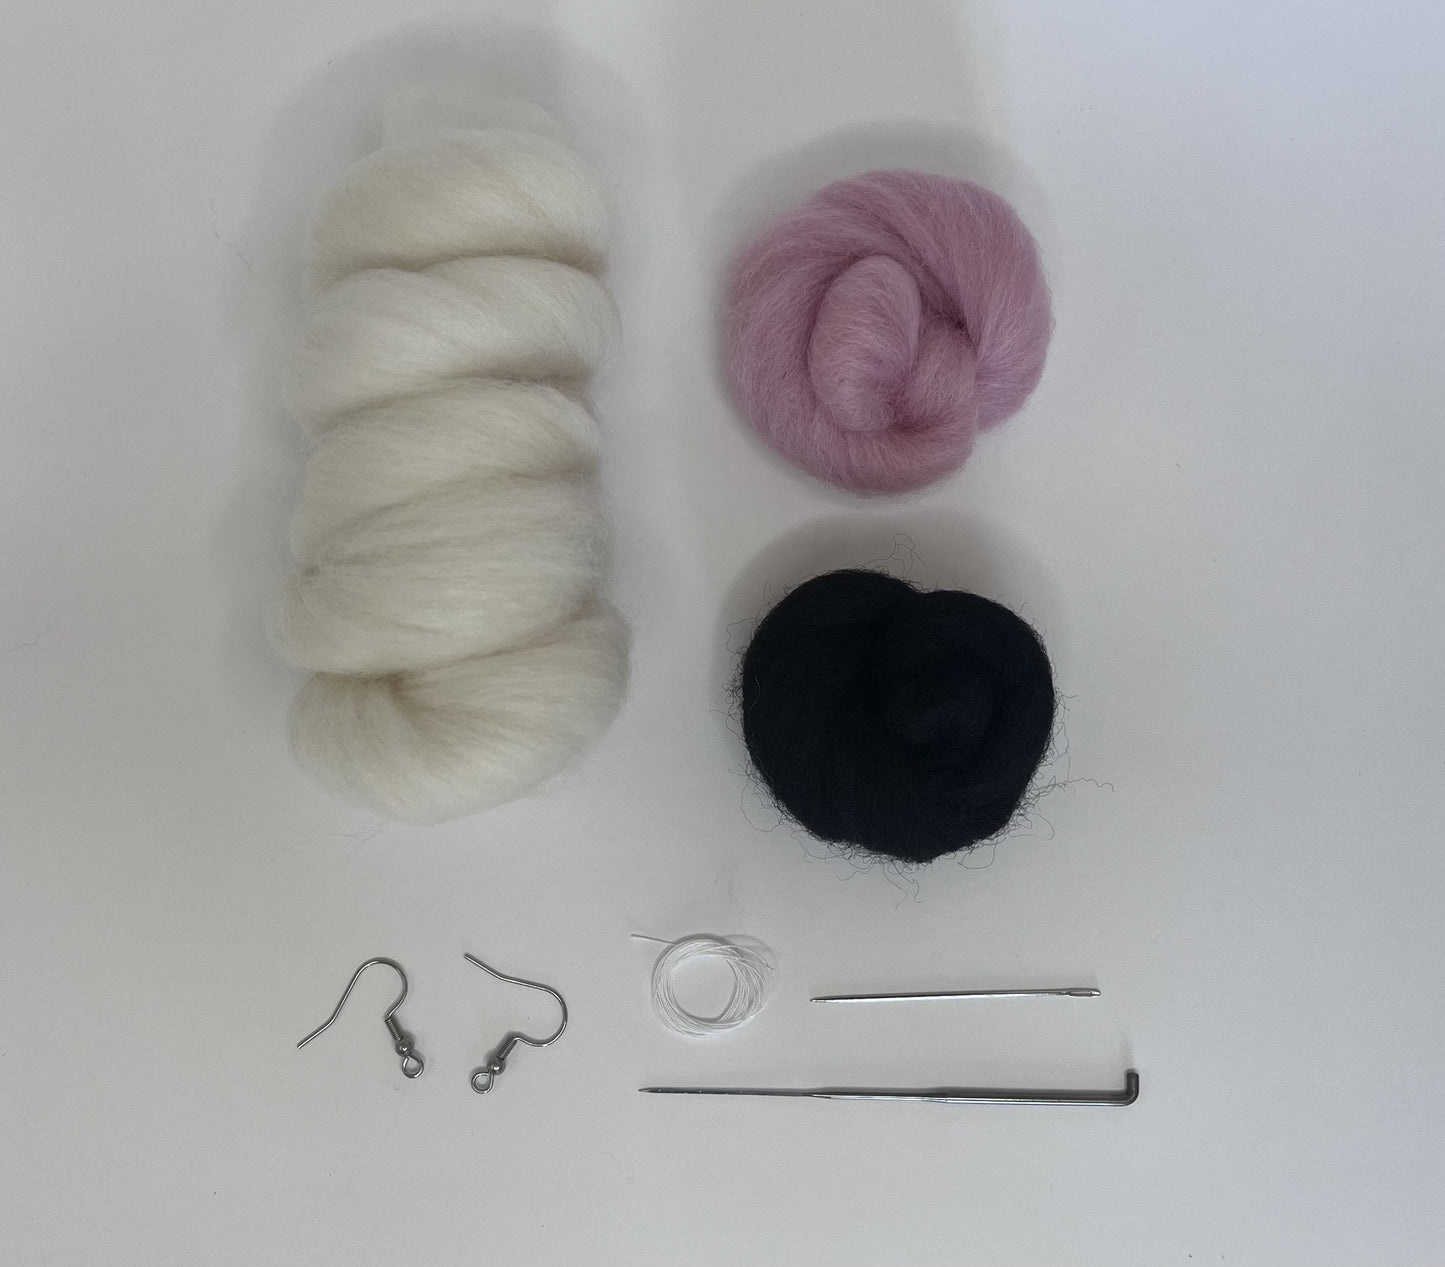 Snowman earring needle felting kit contents